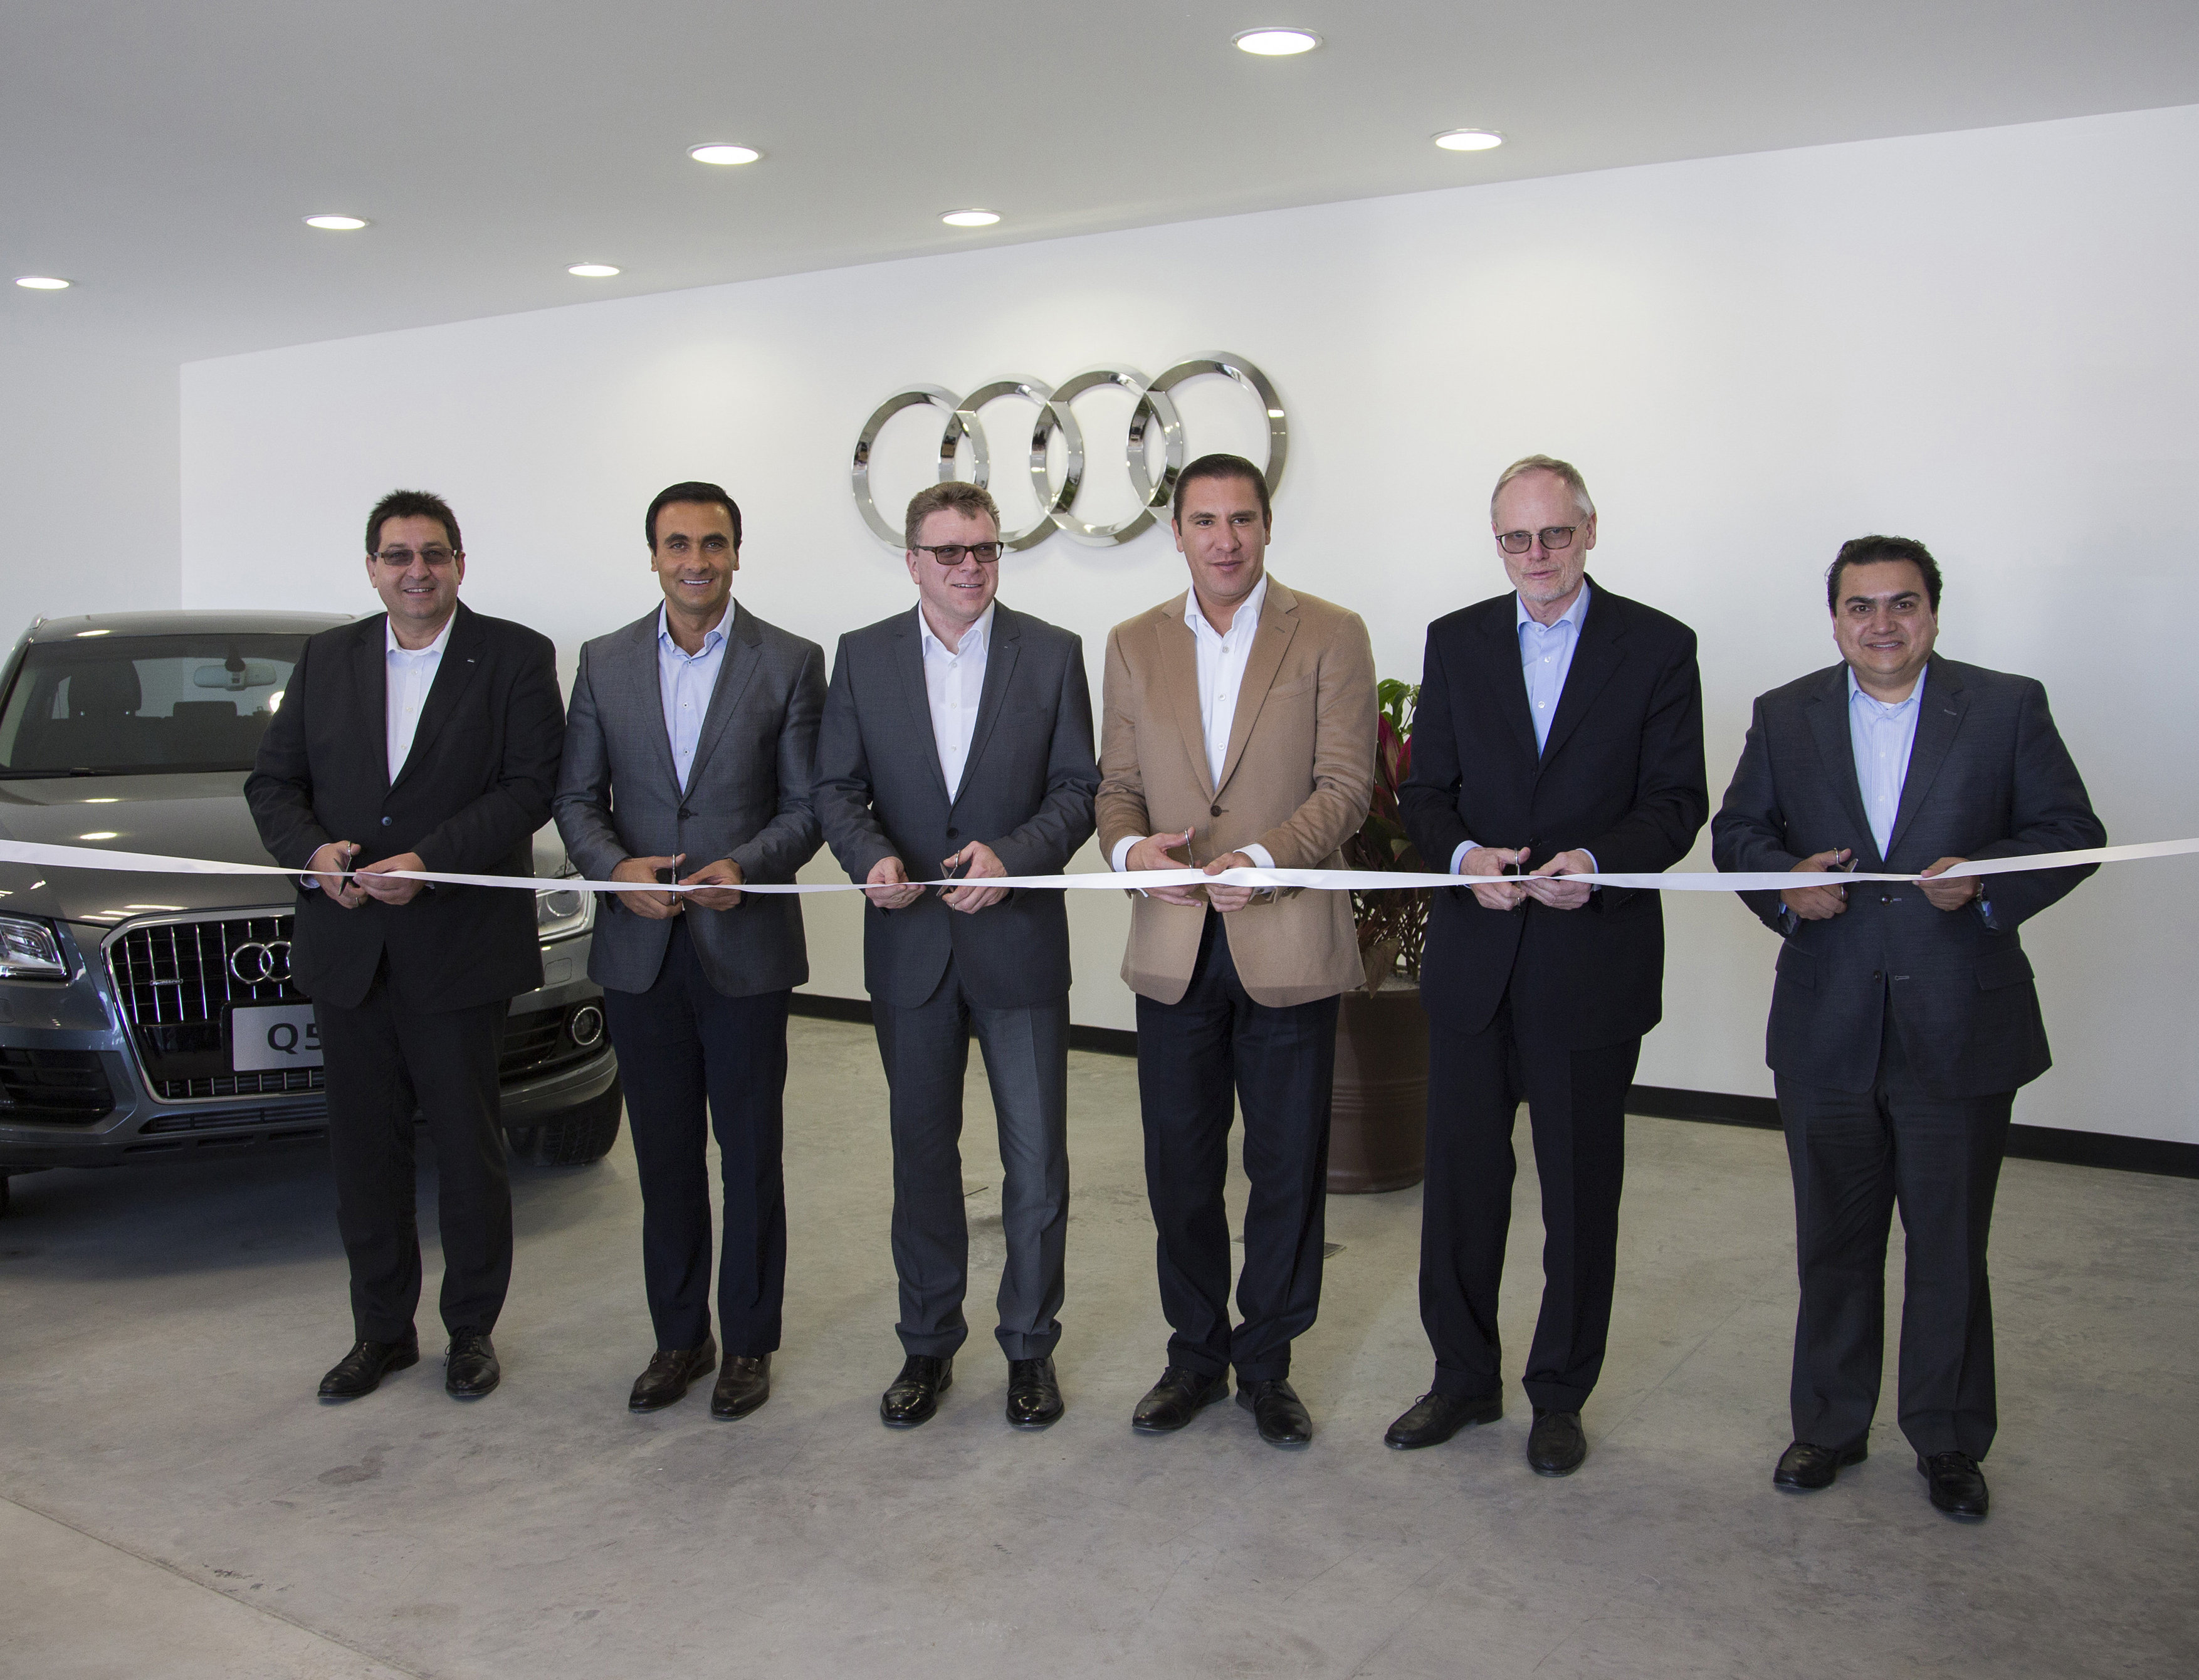 Audi M xico auf Wachstumskurs